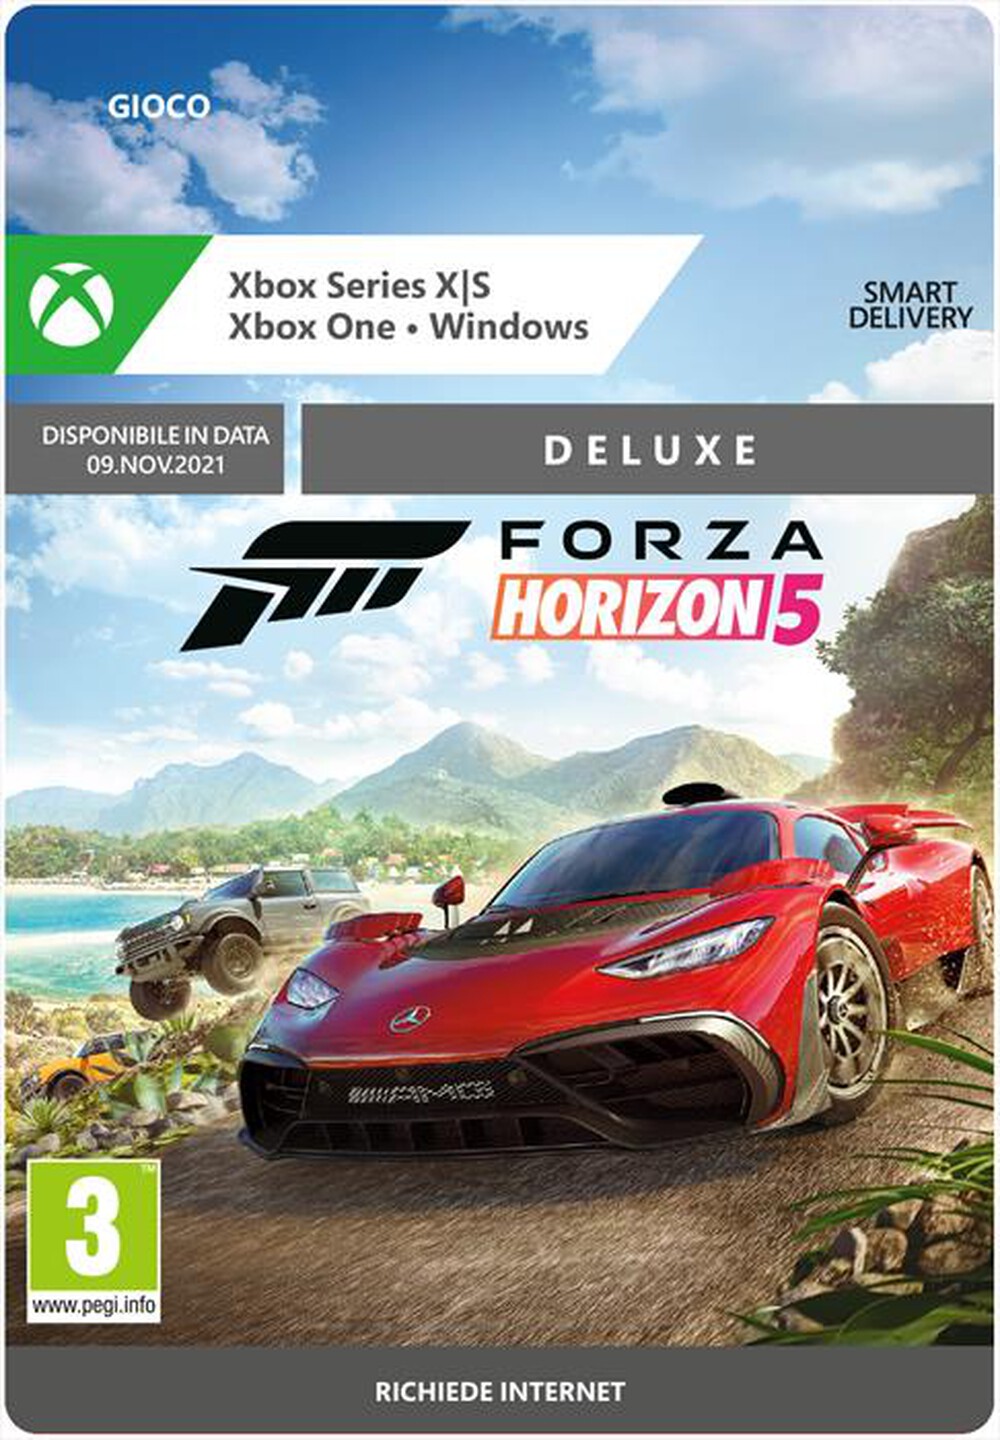 "MICROSOFT - Forza Horizon5 Deluxe Edition"